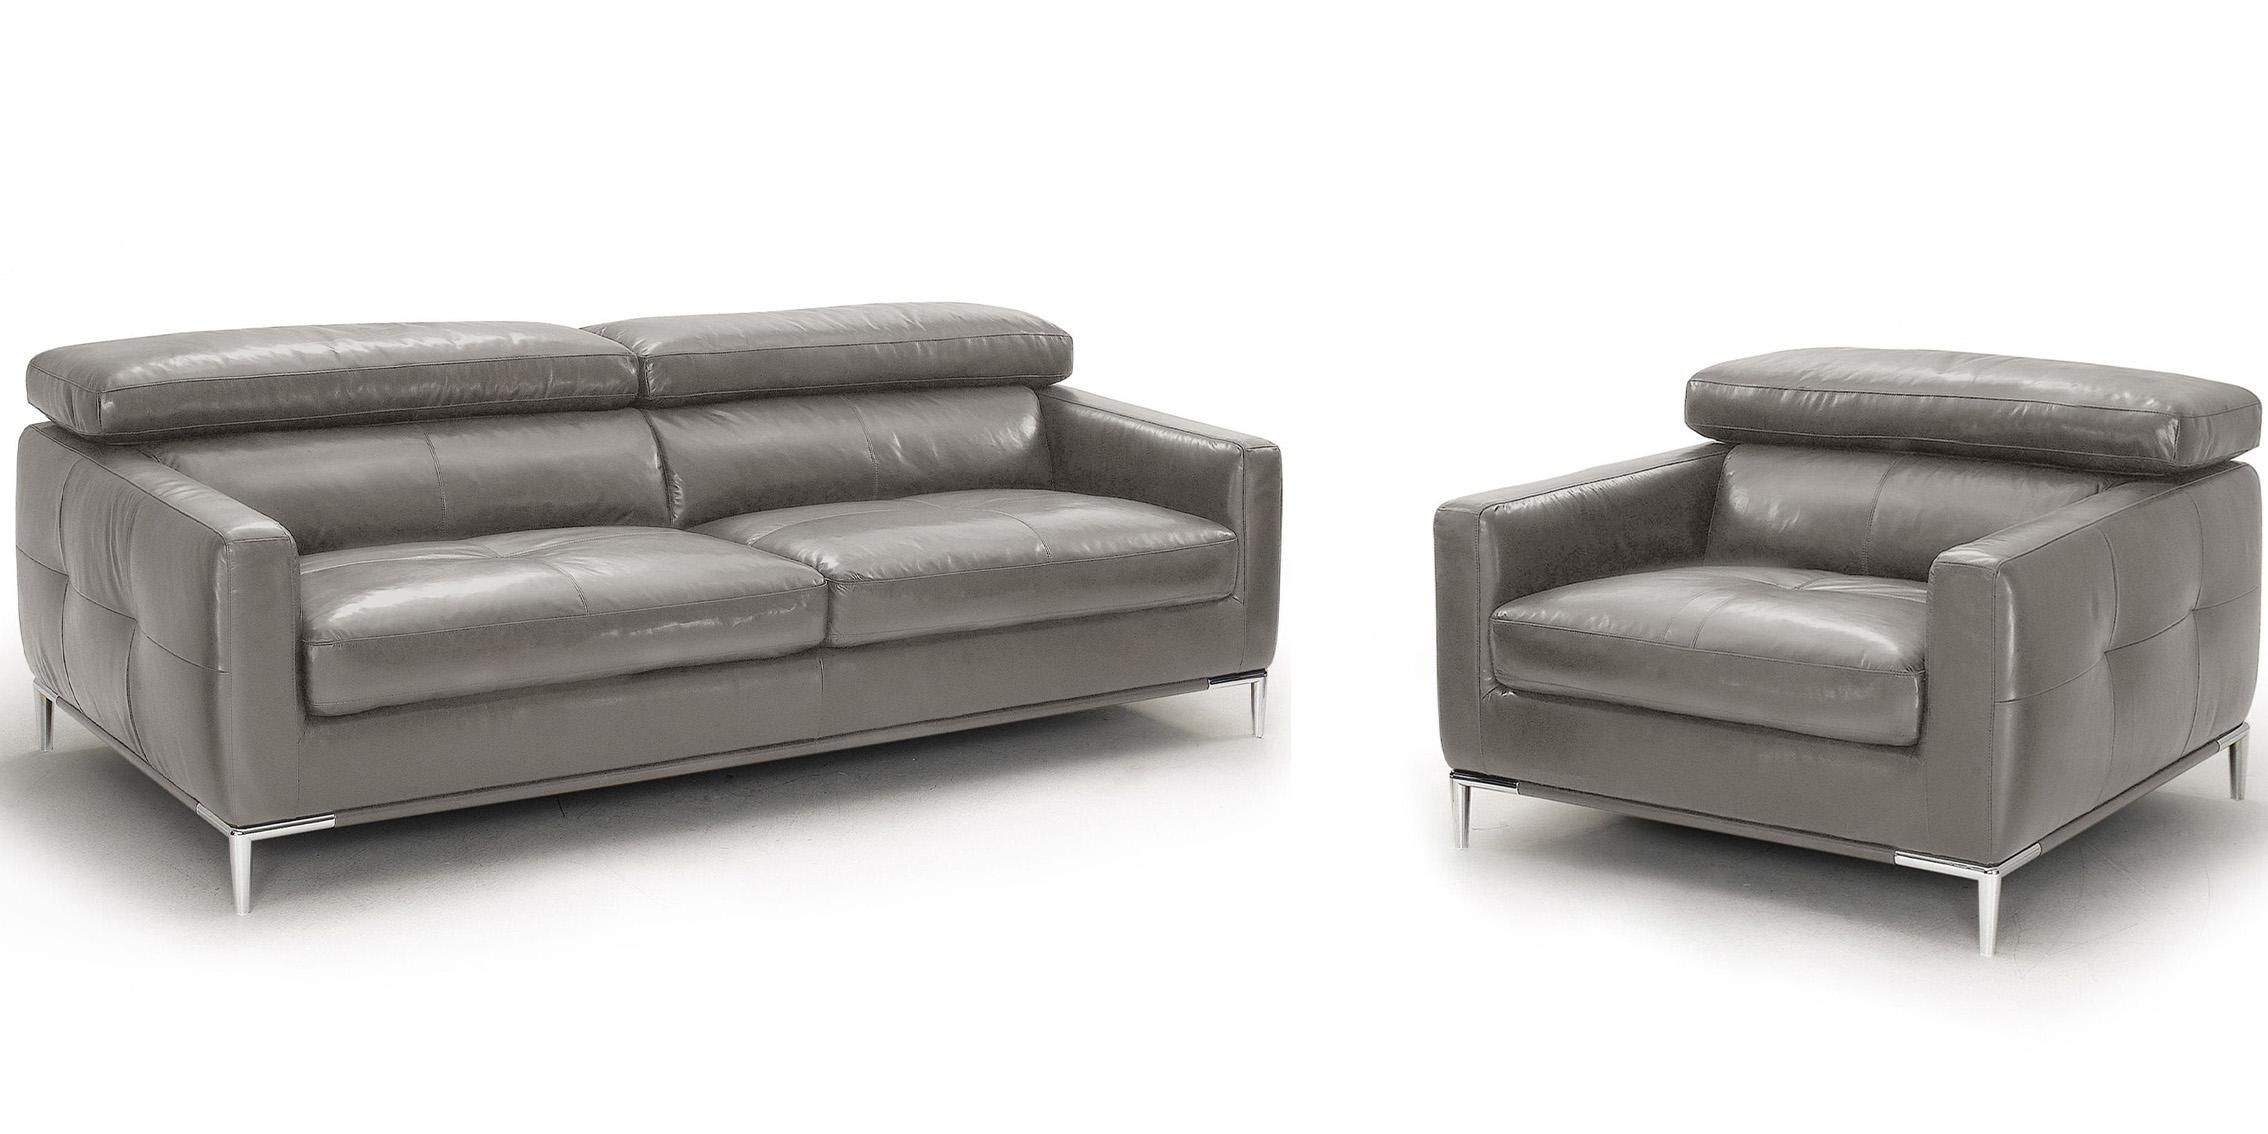 Contemporary, Modern Sofa Set VGKK1281X-DKGRY-S-Set-2 VGKK1281X-DKGRY-S-Set-2 in Dark Grey Leather